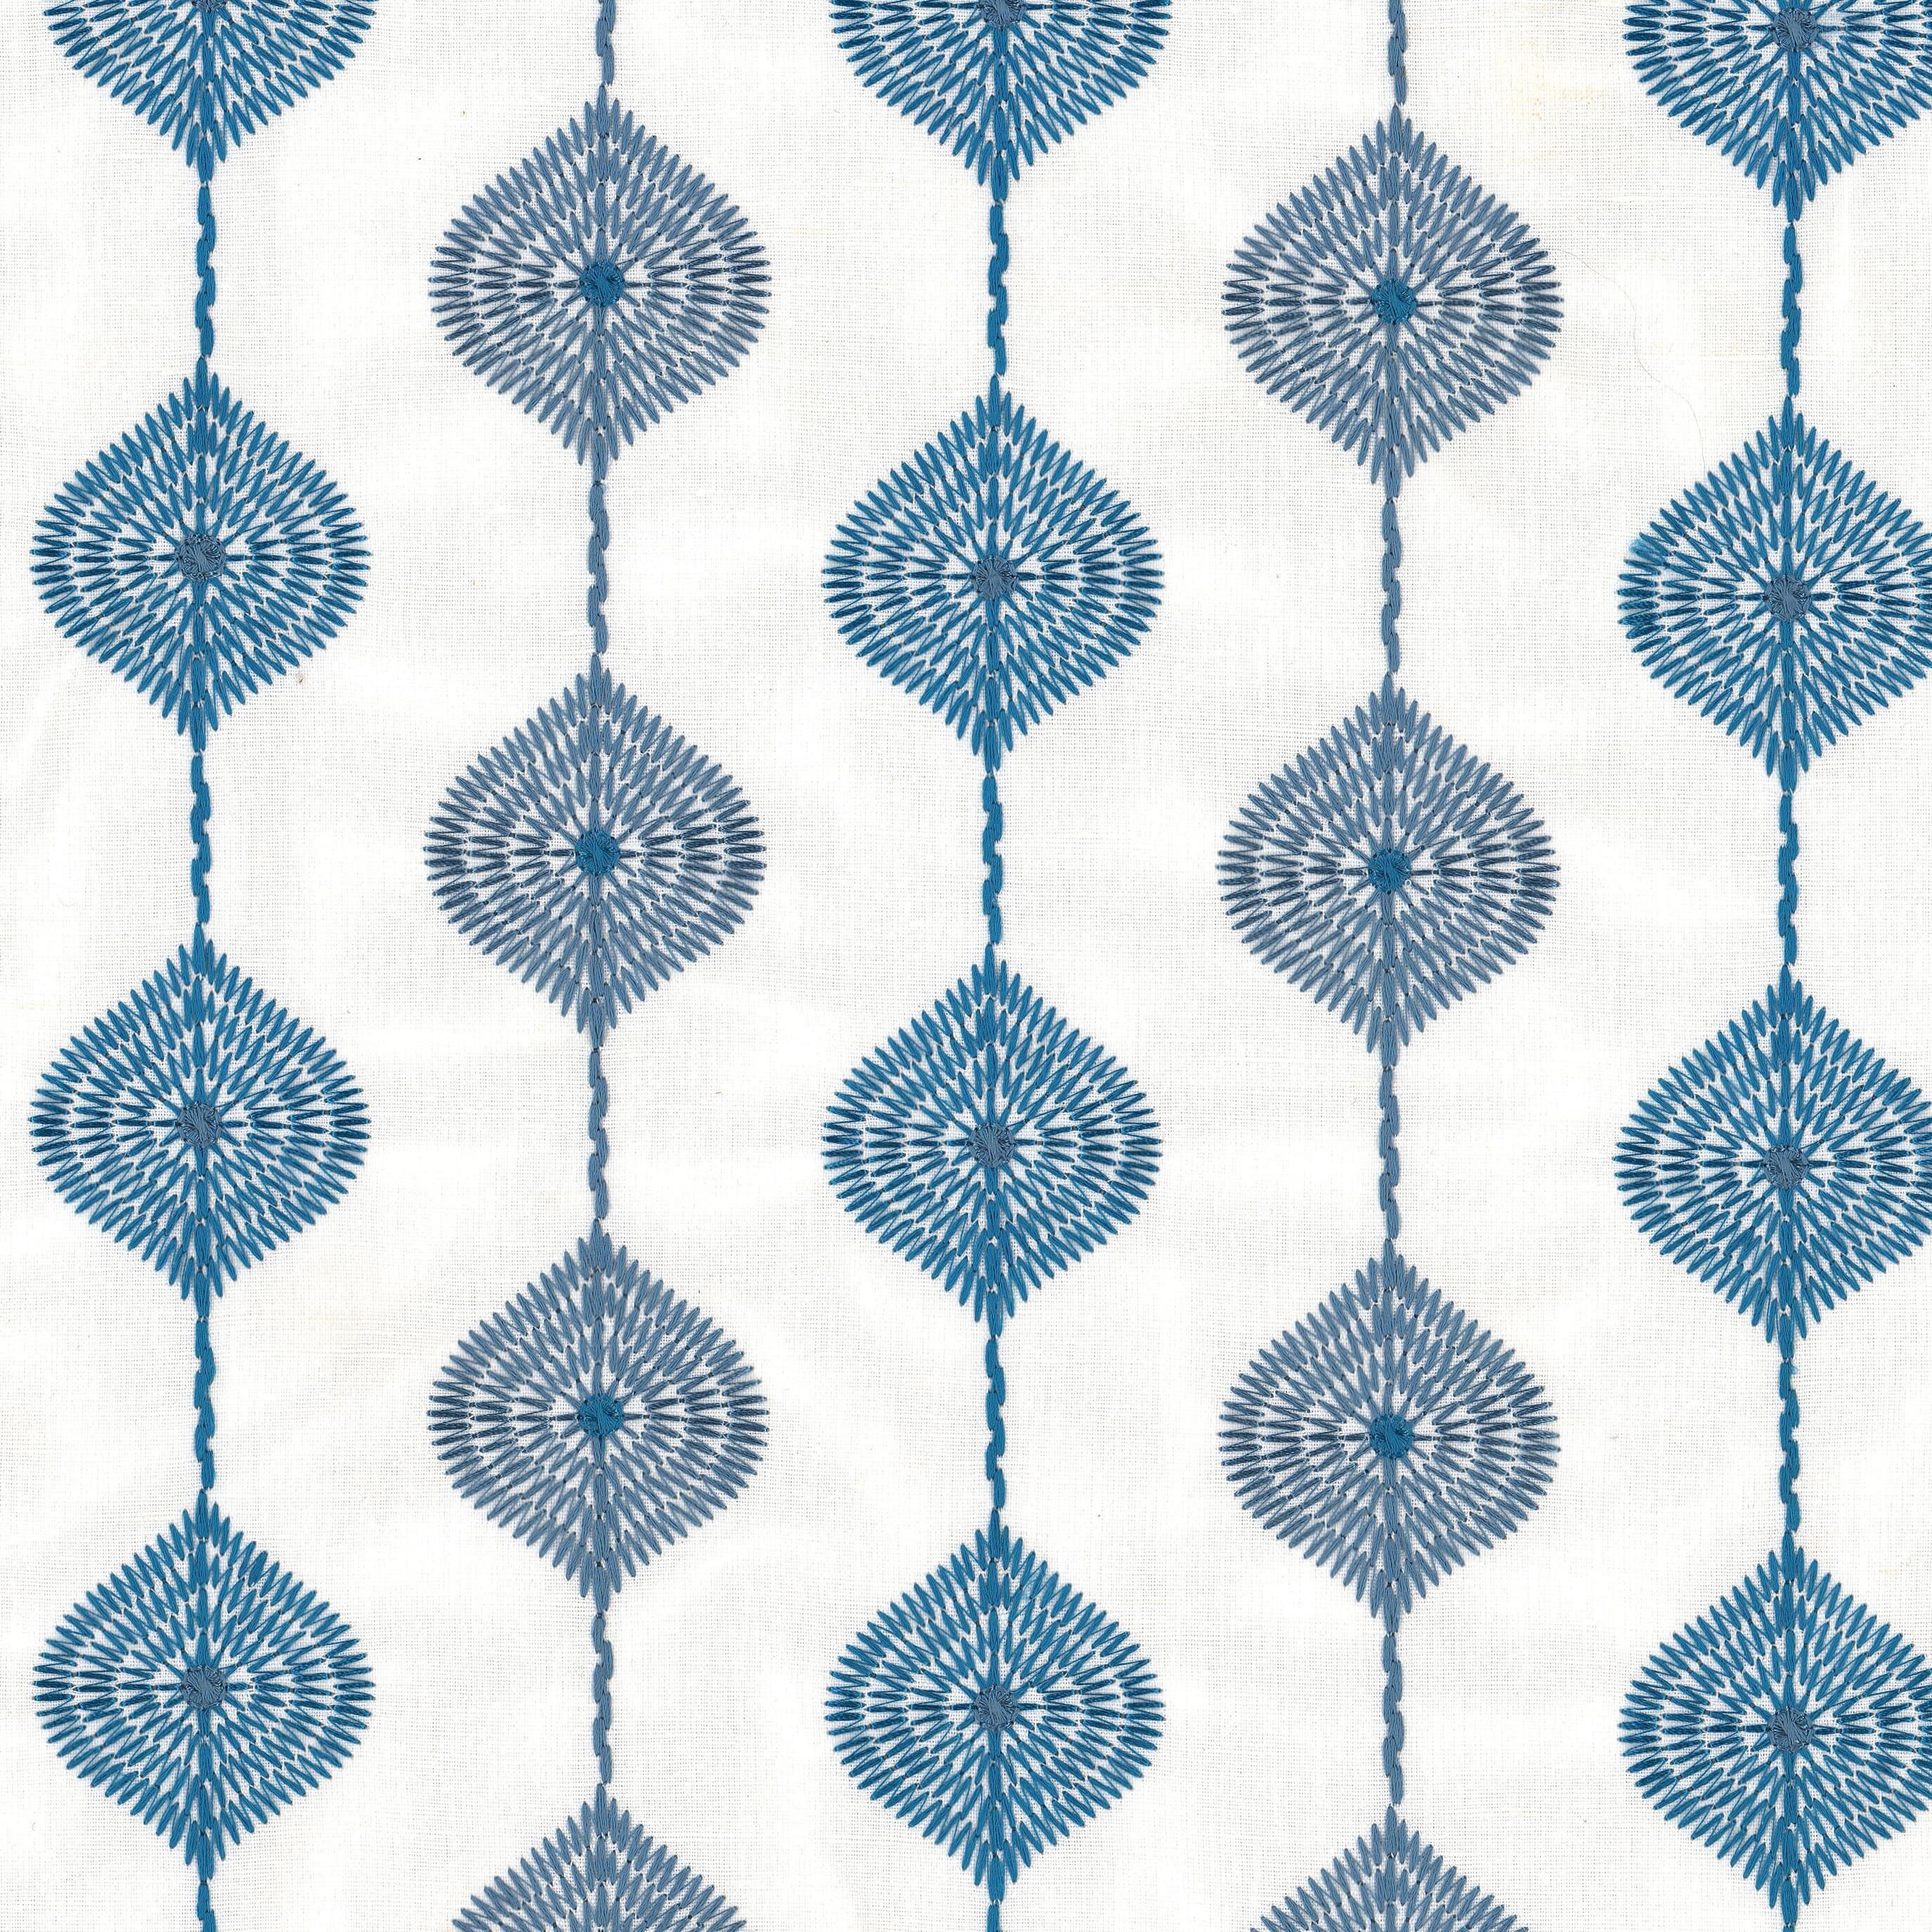 Tetra 1 Bluebird by Stout Fabric